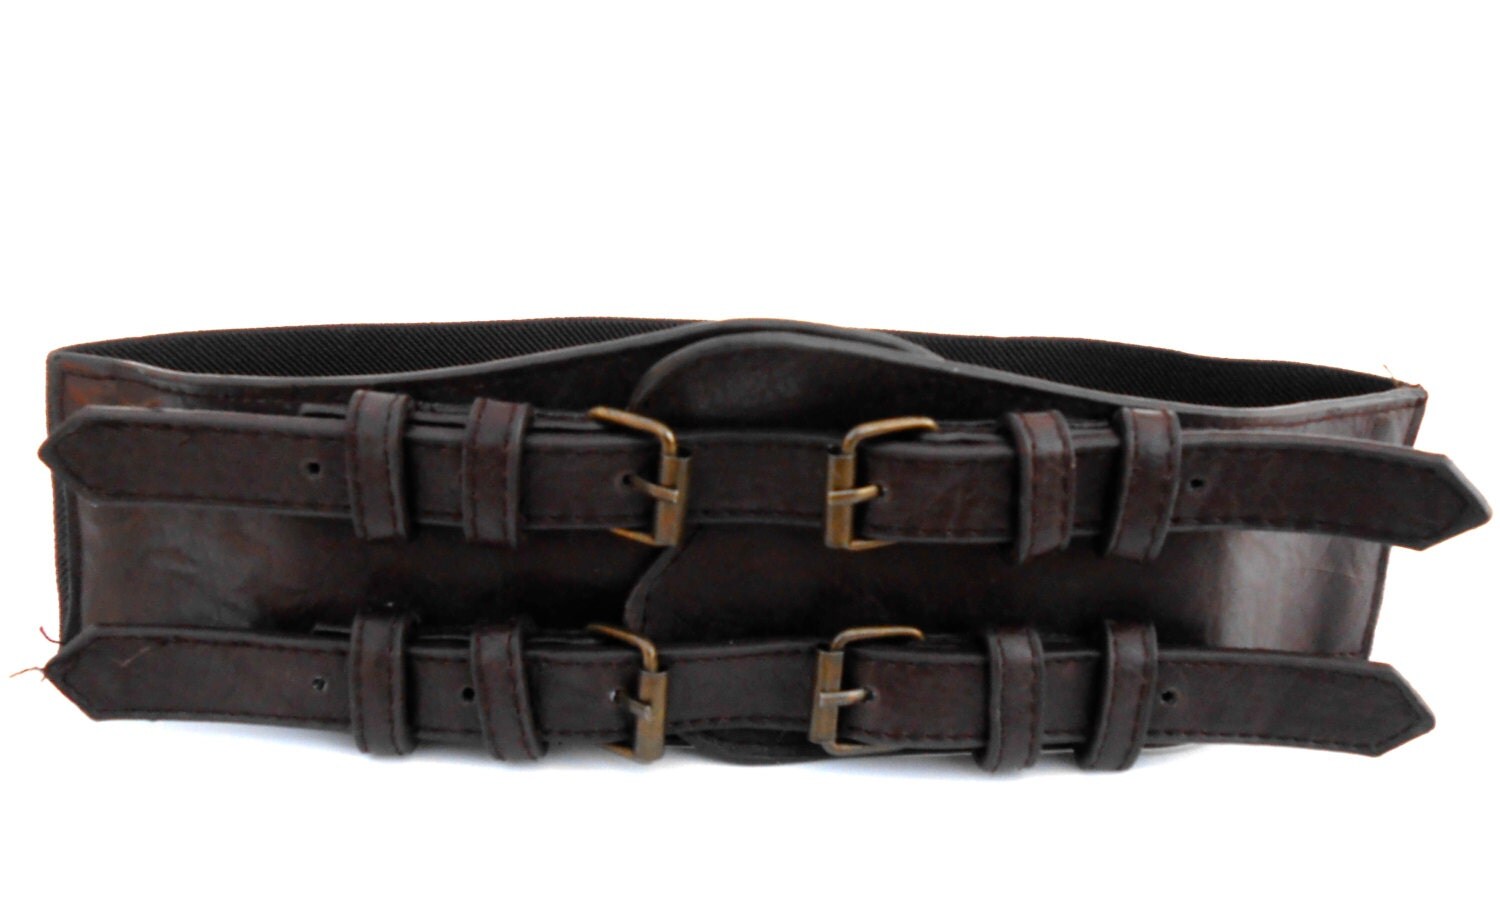 Vintage Military Belt Brown Leather Thick Waist Adjustable